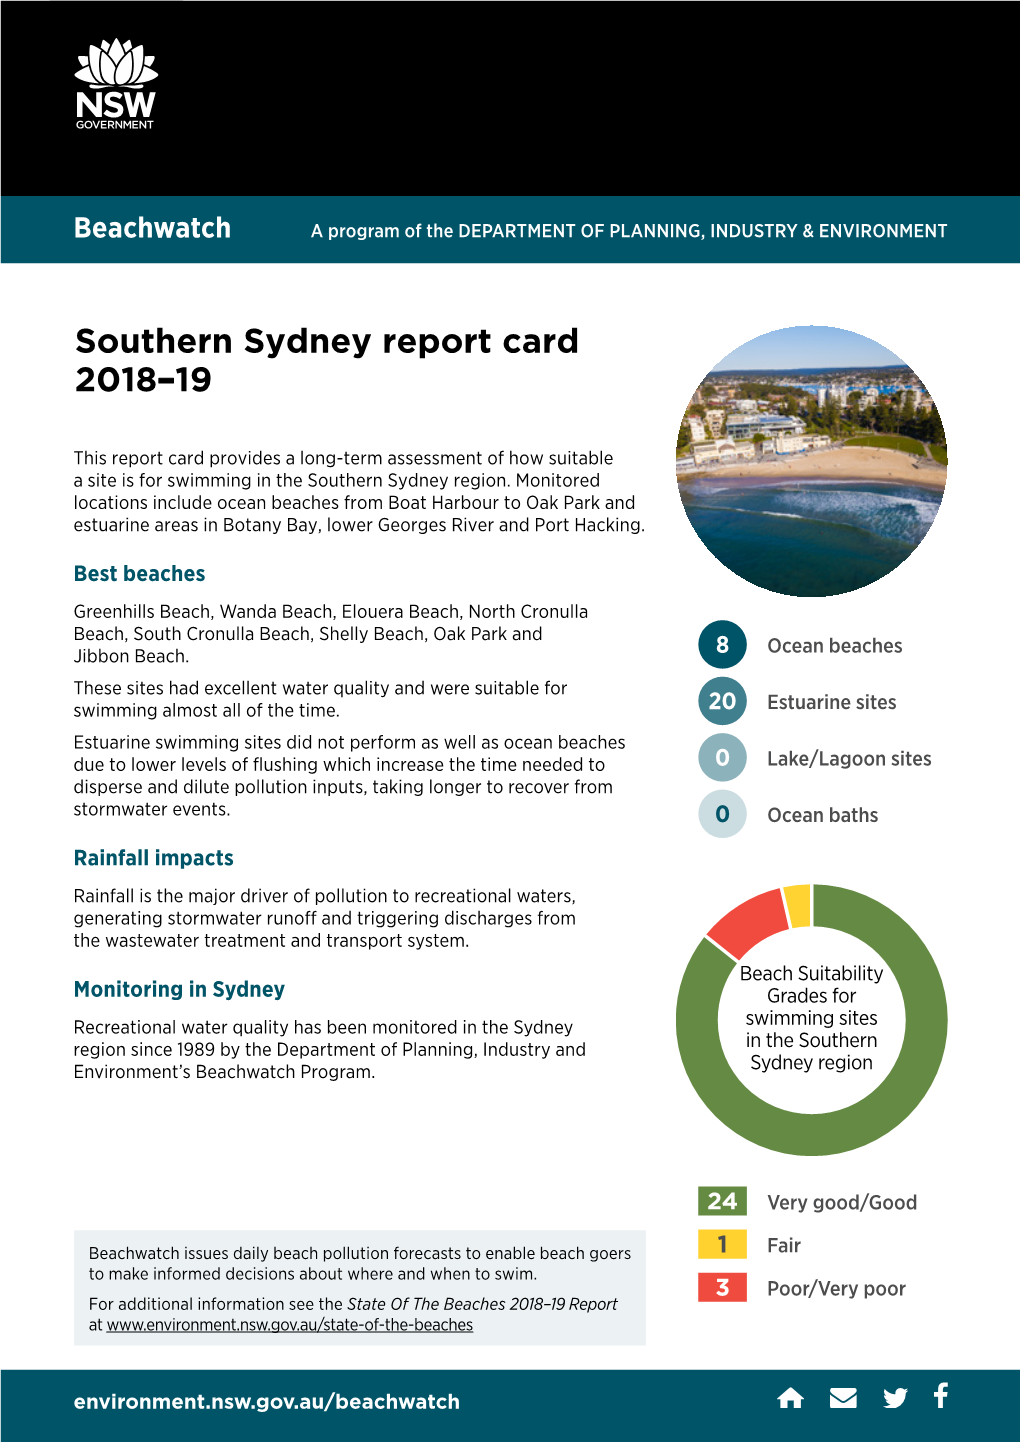 Southern Sydney Region